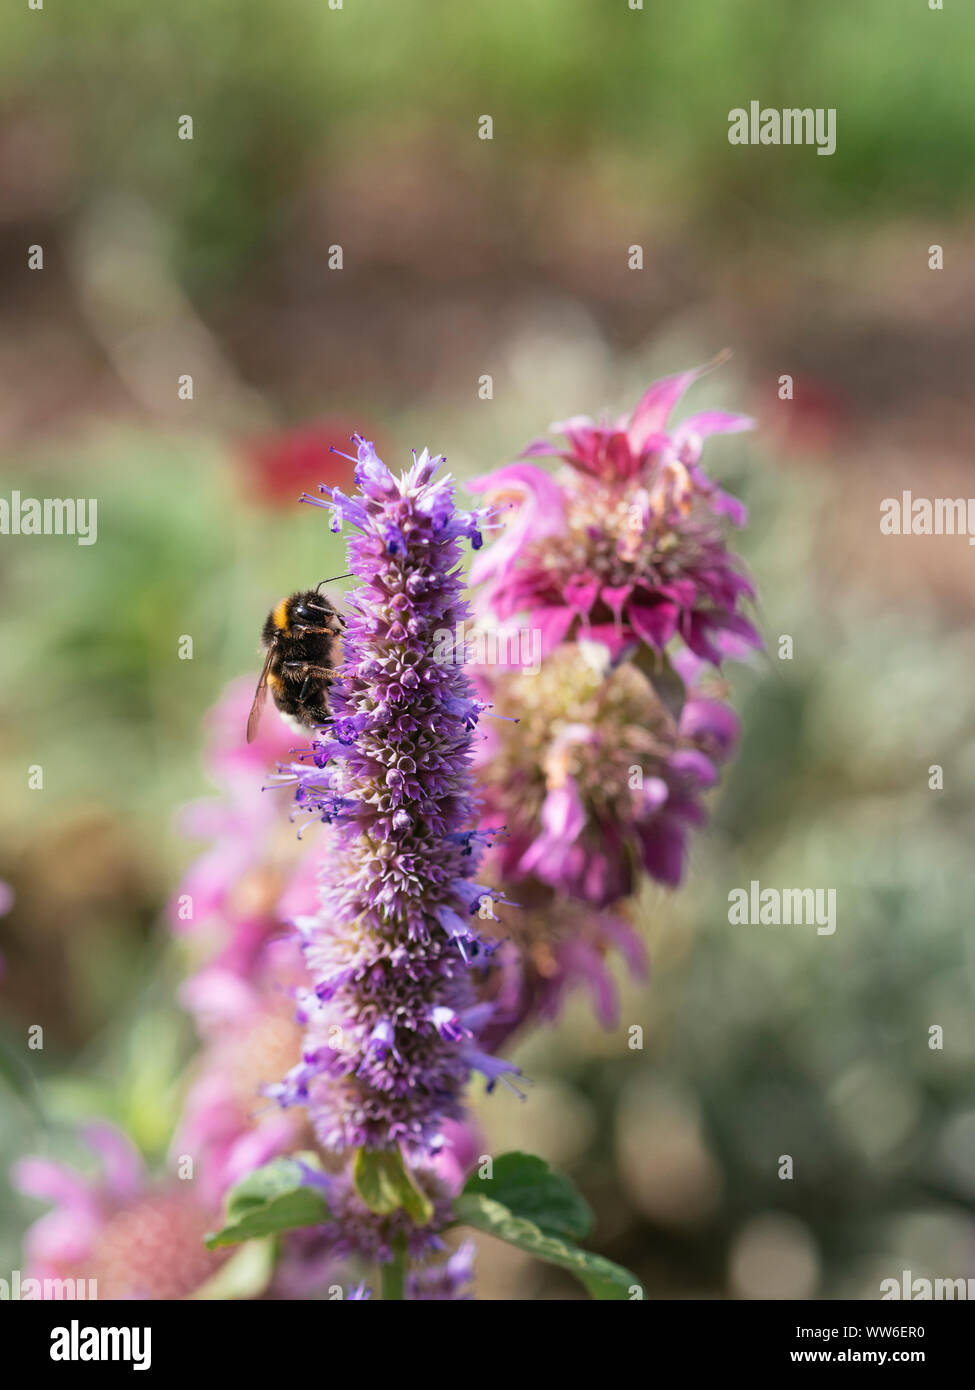 Bumble bee feeding on anise hyssop (Agastache foeniculum) flowers. Stock Photo